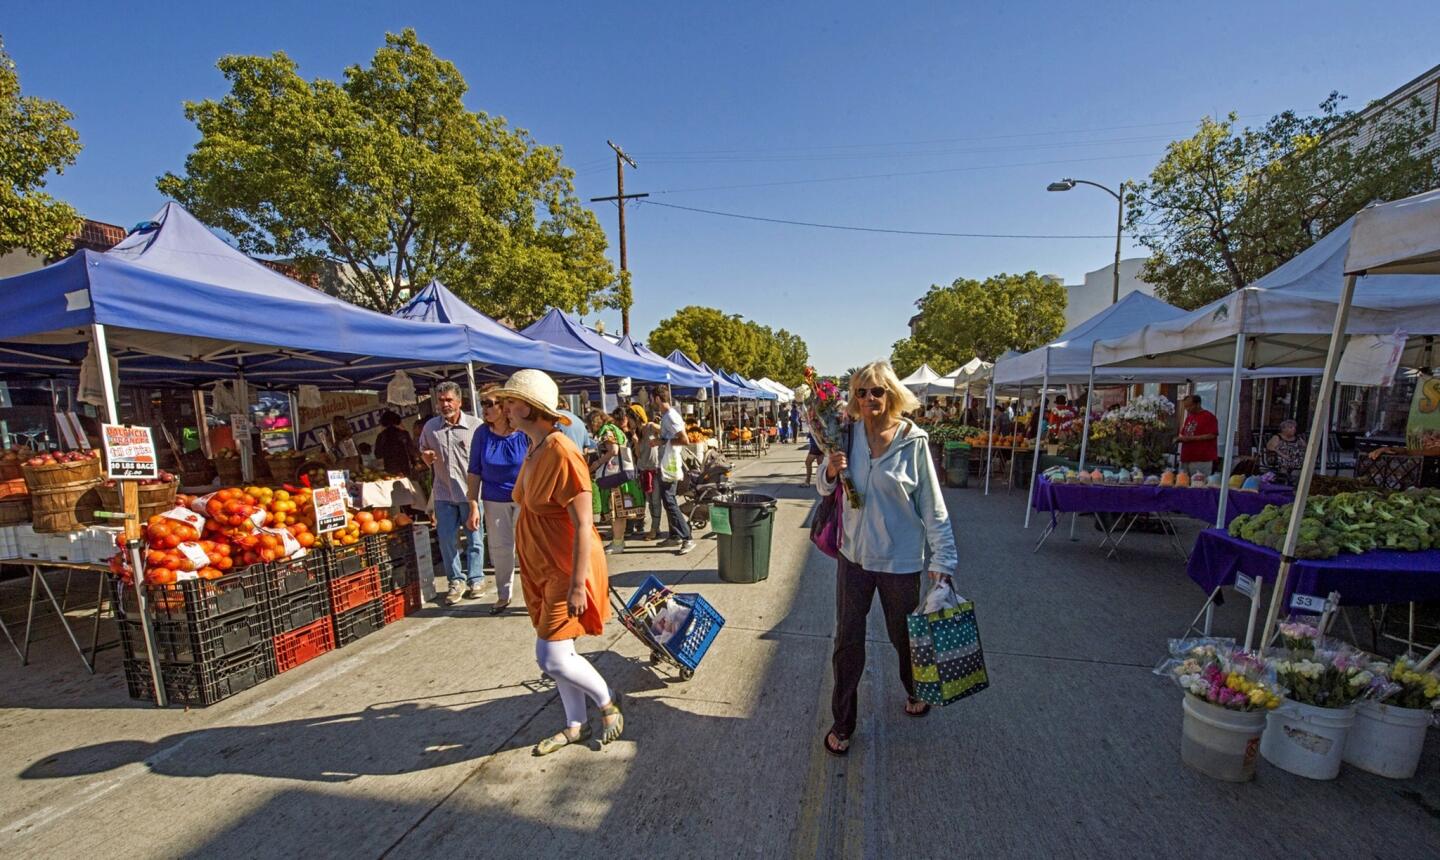 The Culver City farmers market features 30 vendors.